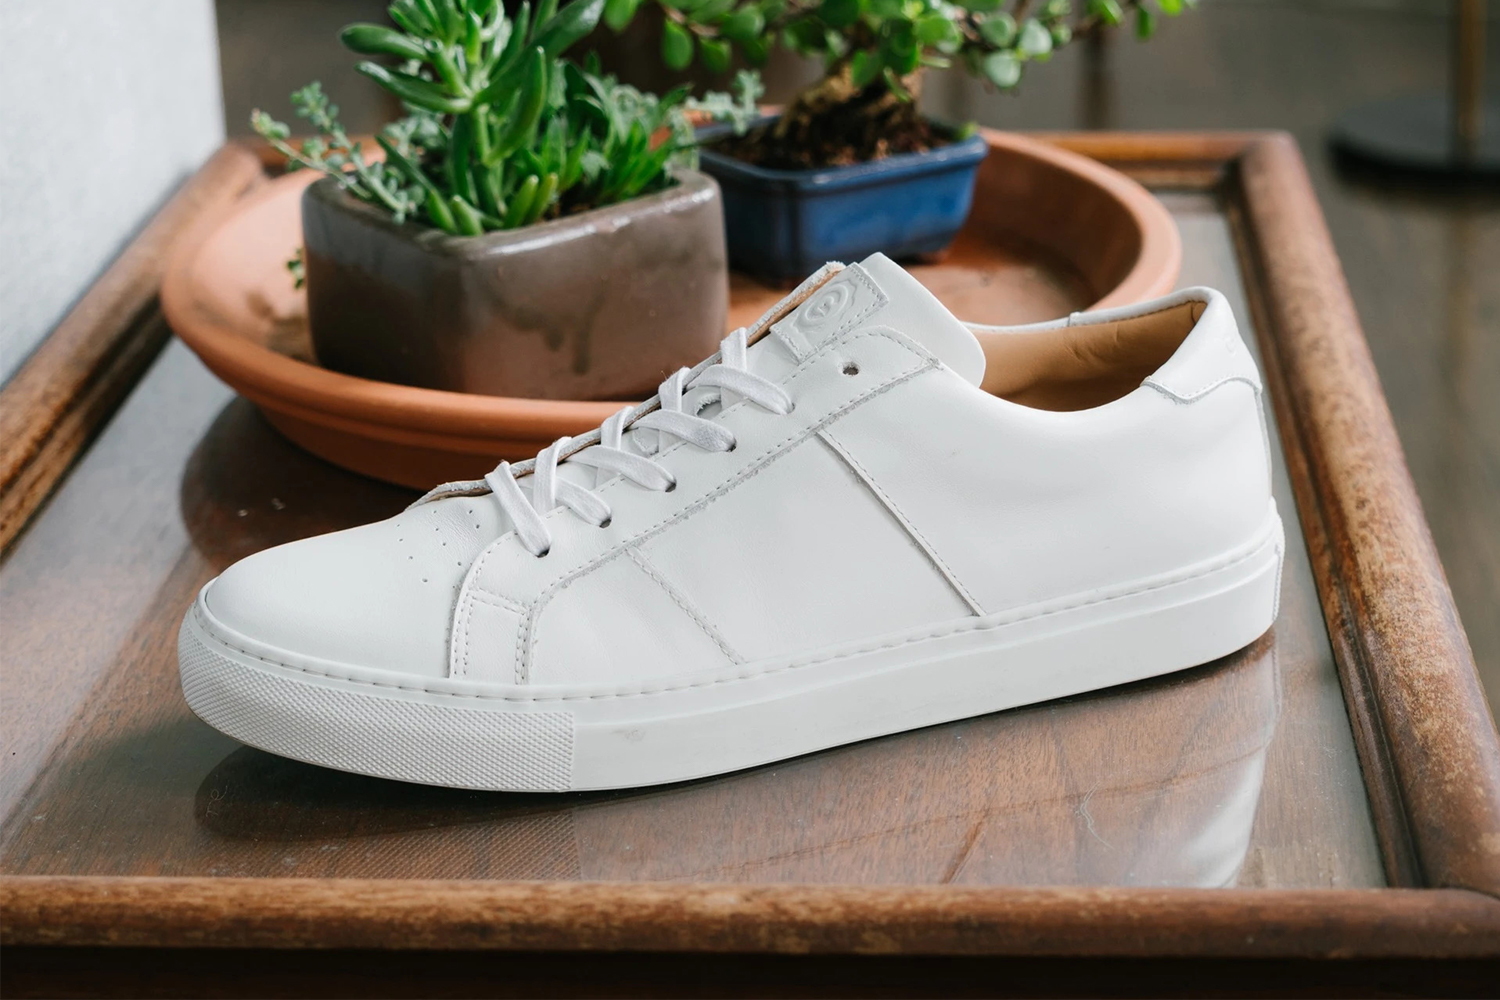 halsband Doorlaatbaarheid Knorretje Greats' Quintessential White Sneaker Is on Sale - InsideHook